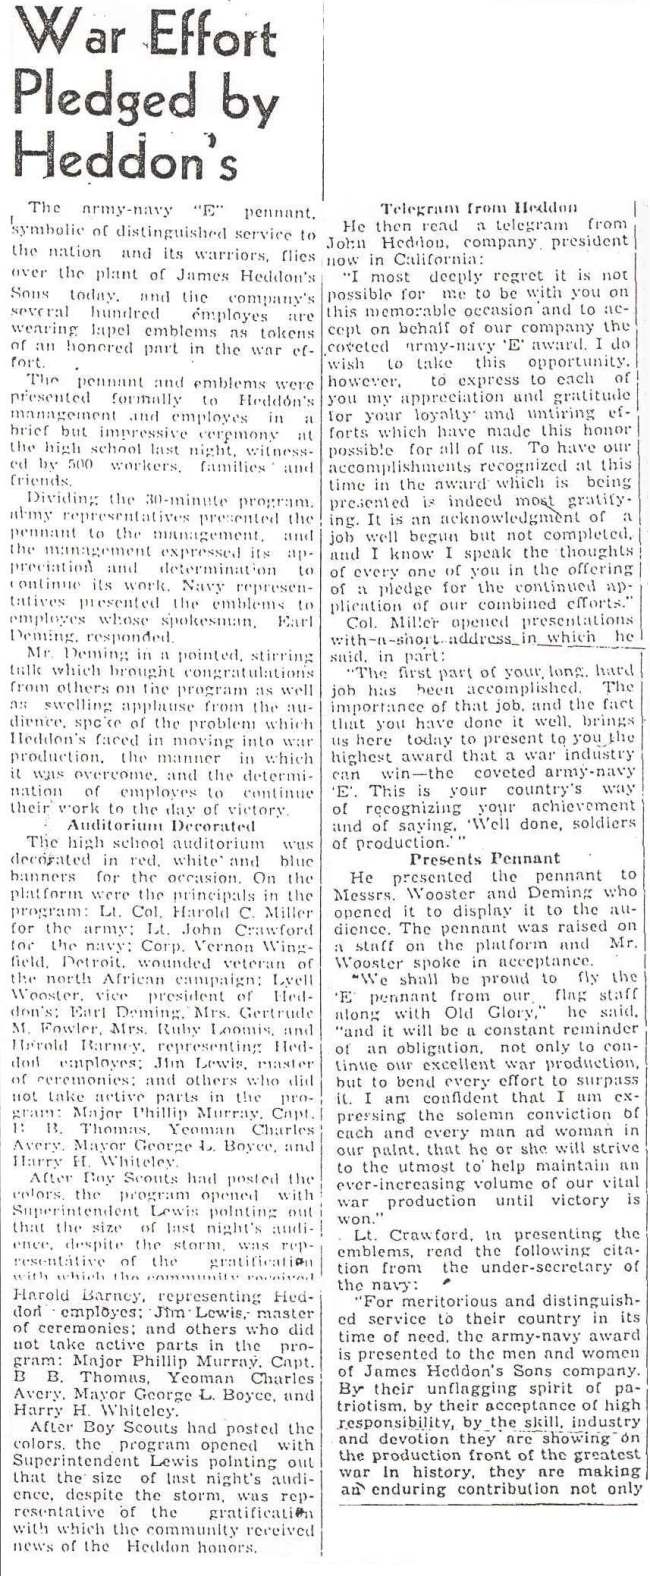 The Daily News - Dowagiac, Michigan, Friday, March 31, 1944